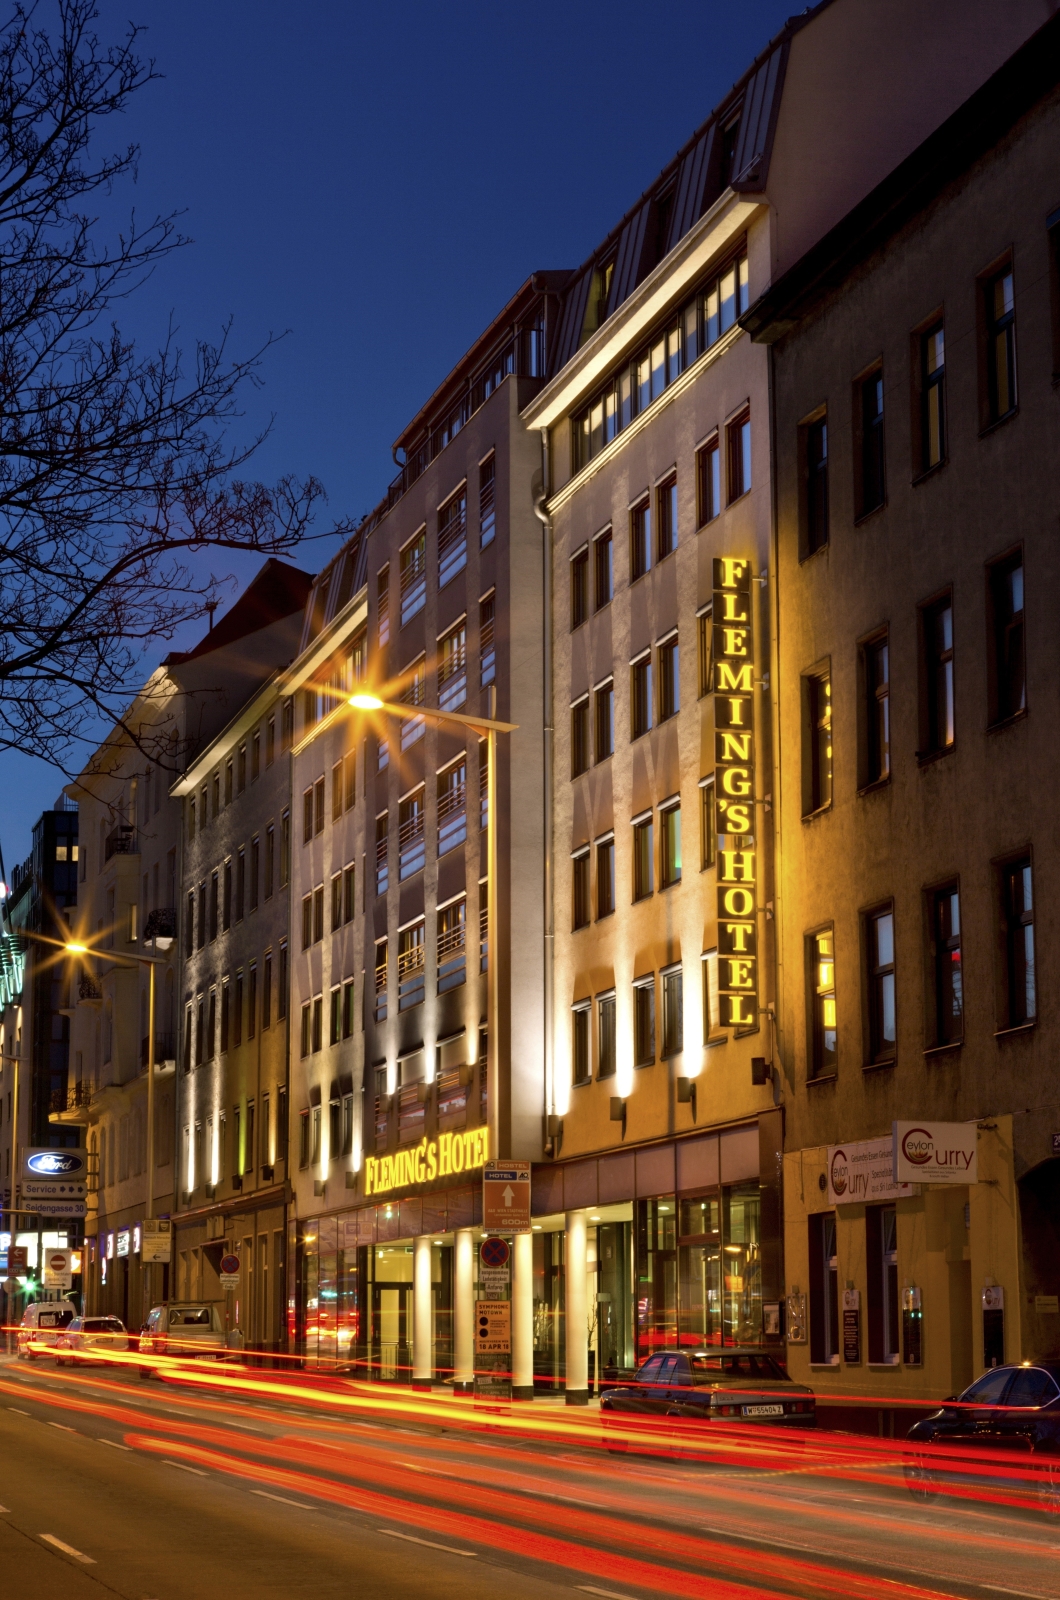 Fleming's Conference Hotel Wien - 4 HRS star hotel in Vienna (Vienna)